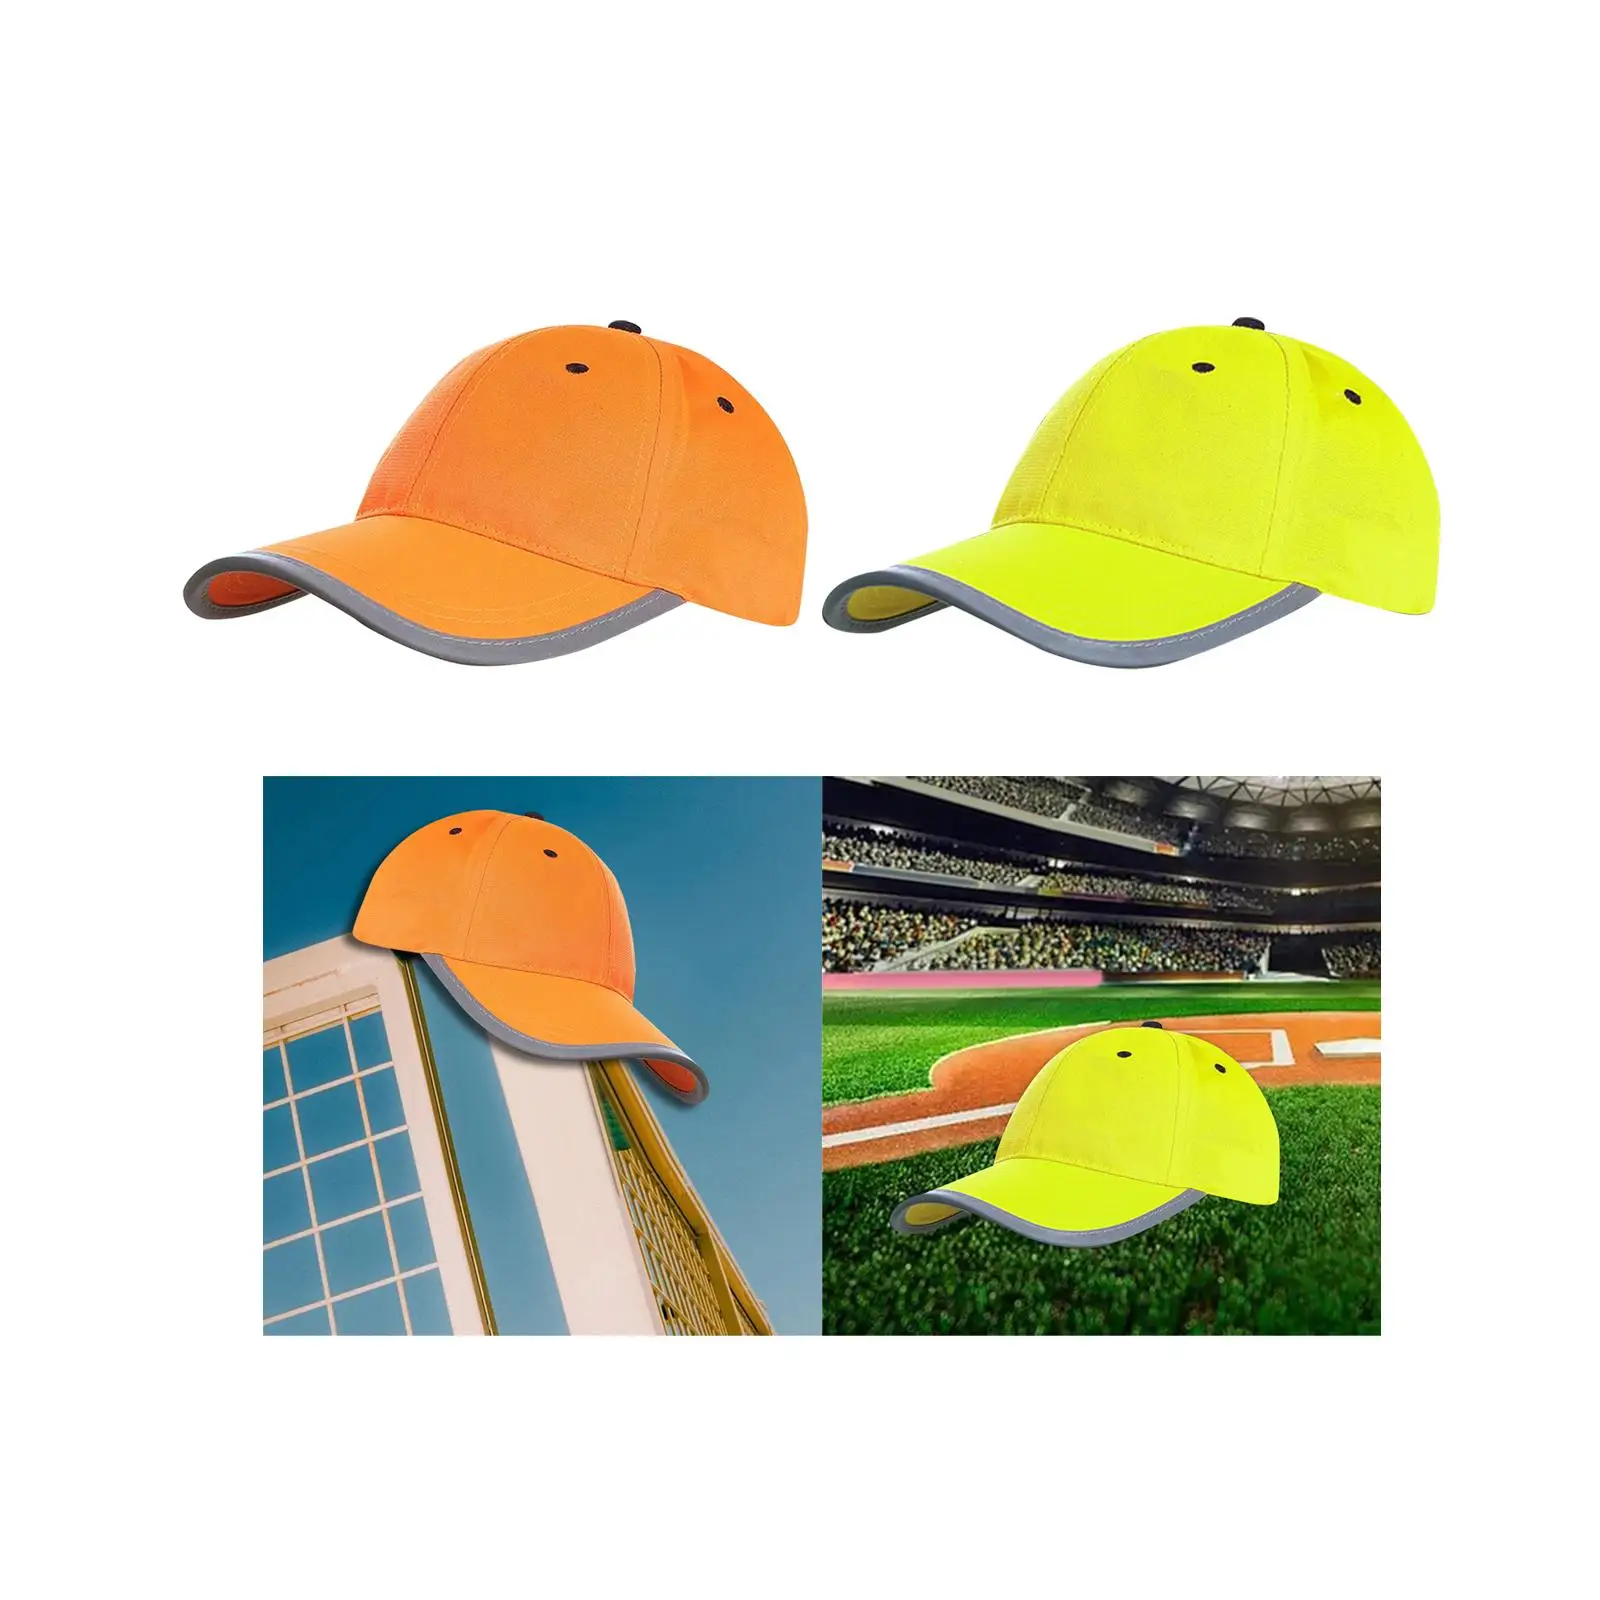 Safety Hat Reflective Running Cap High Visibility Baseball Cap Casual Halloween Cap for Friends Men Women Family Members